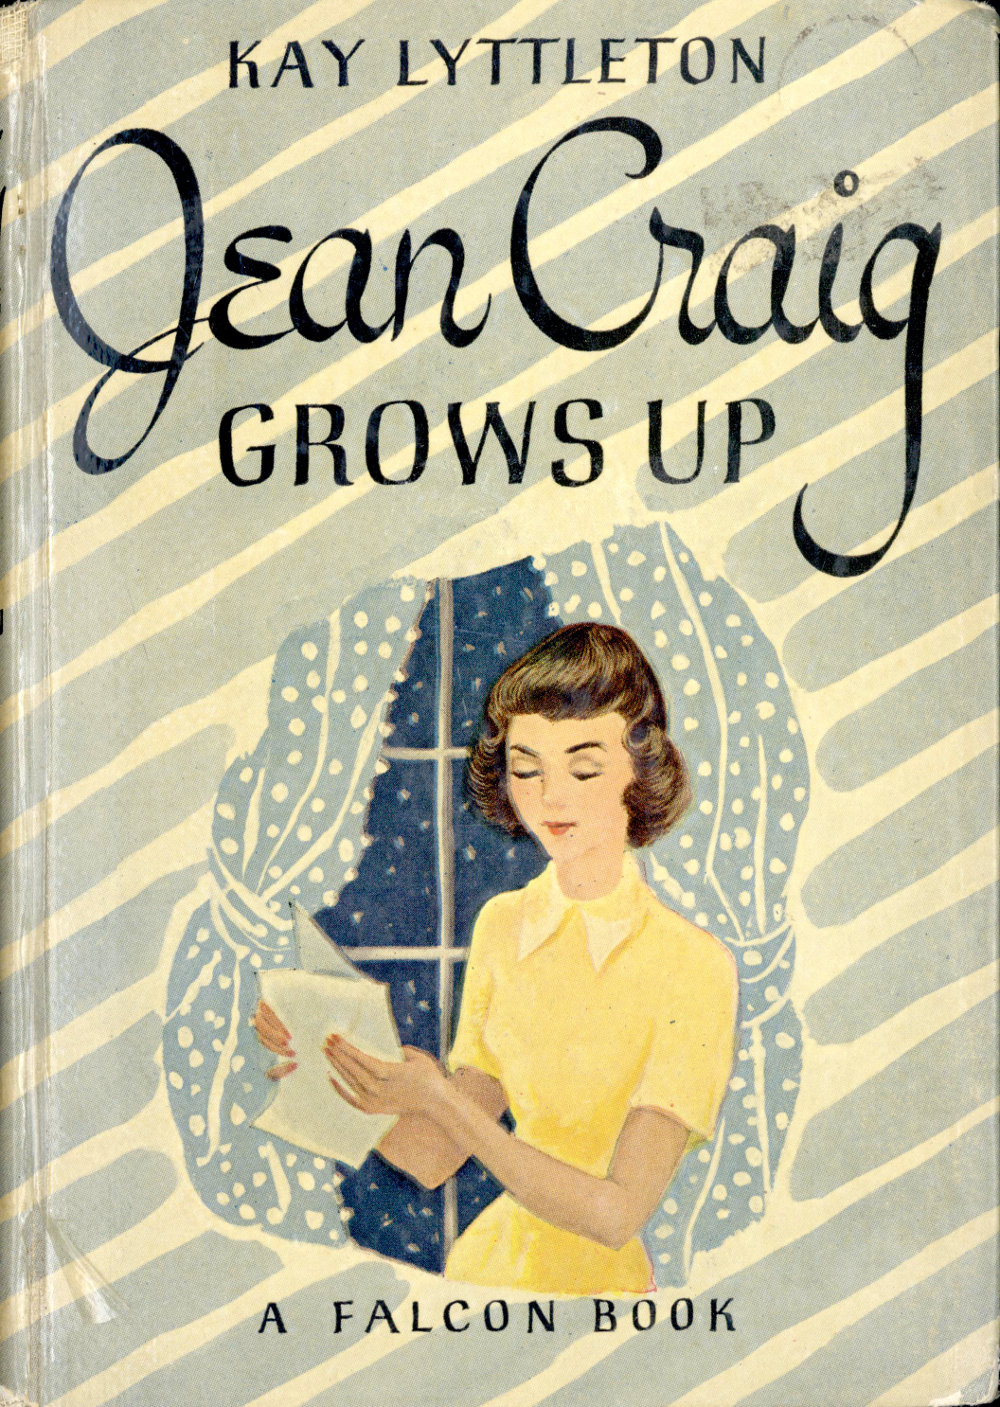 Jean Craig Grows Up